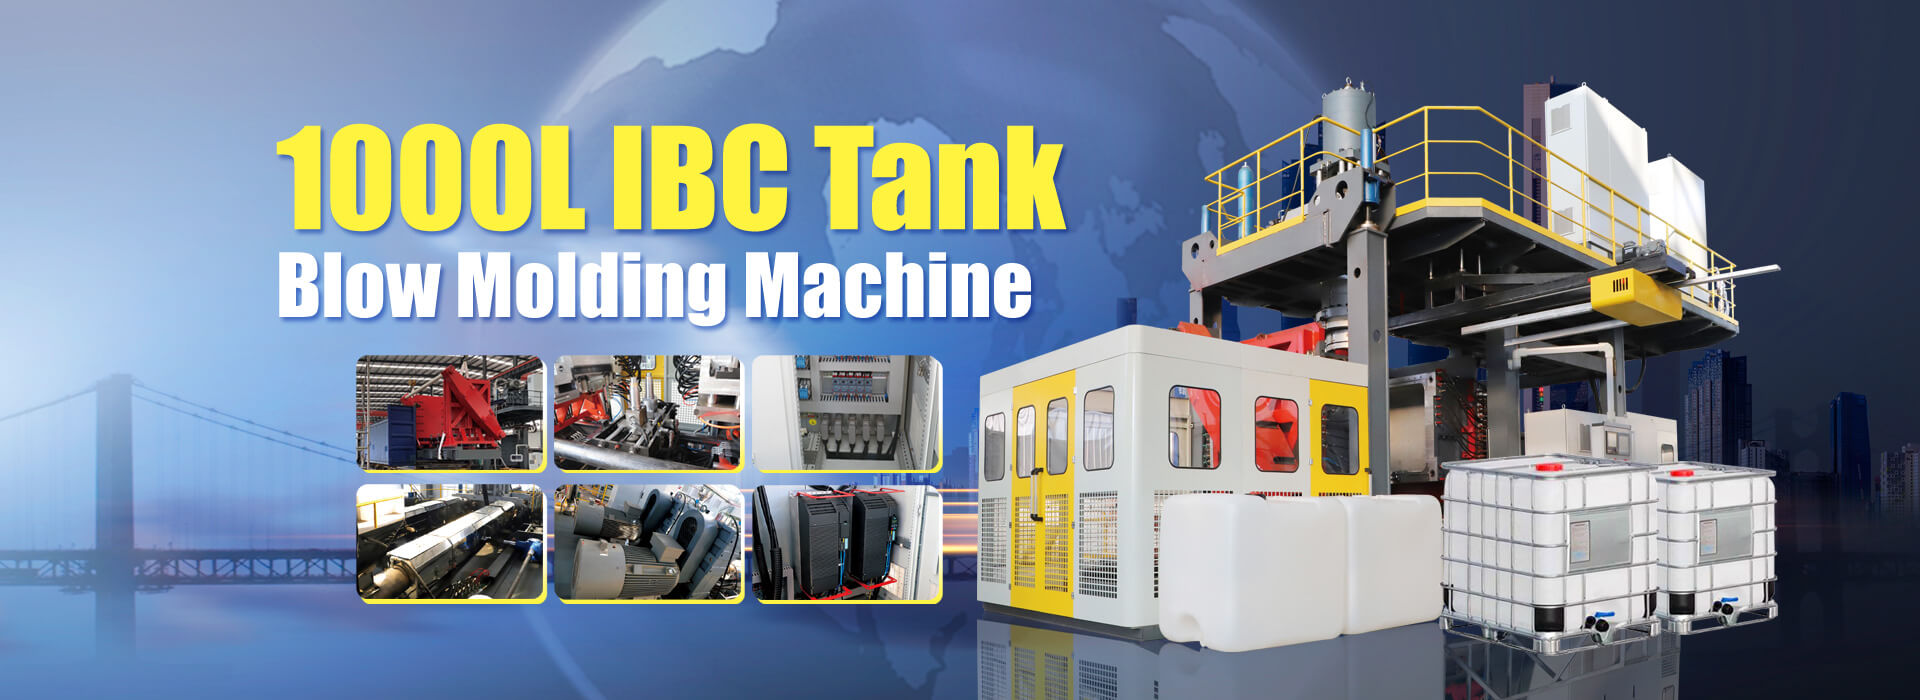 IBC Tank Blow Molding Machine